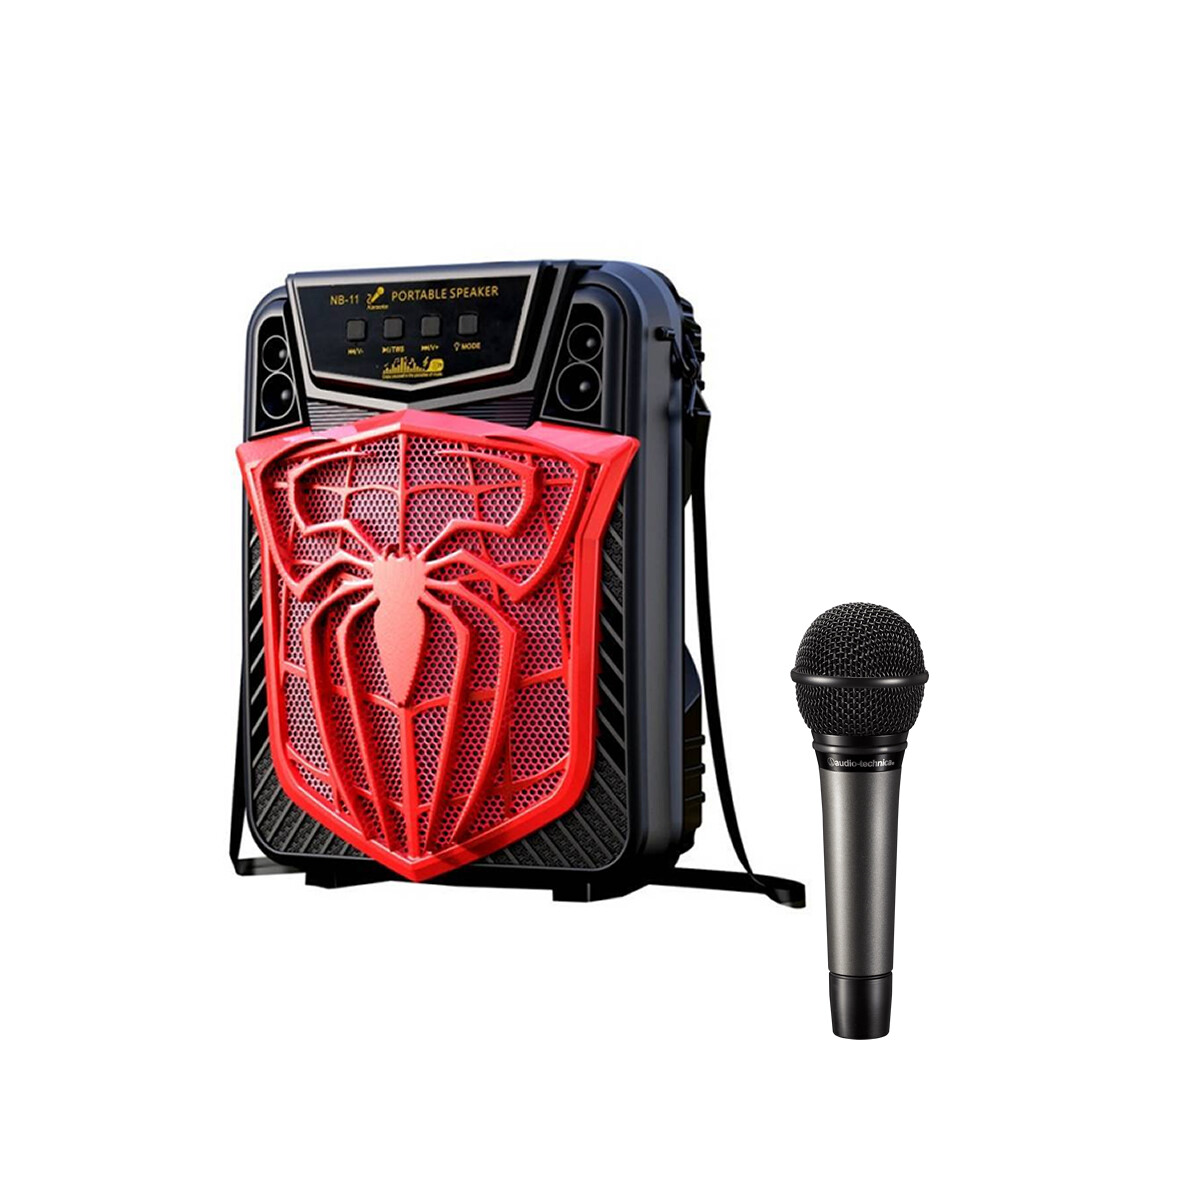 Parlante Portátil Spider Con Micrófono NB-11 